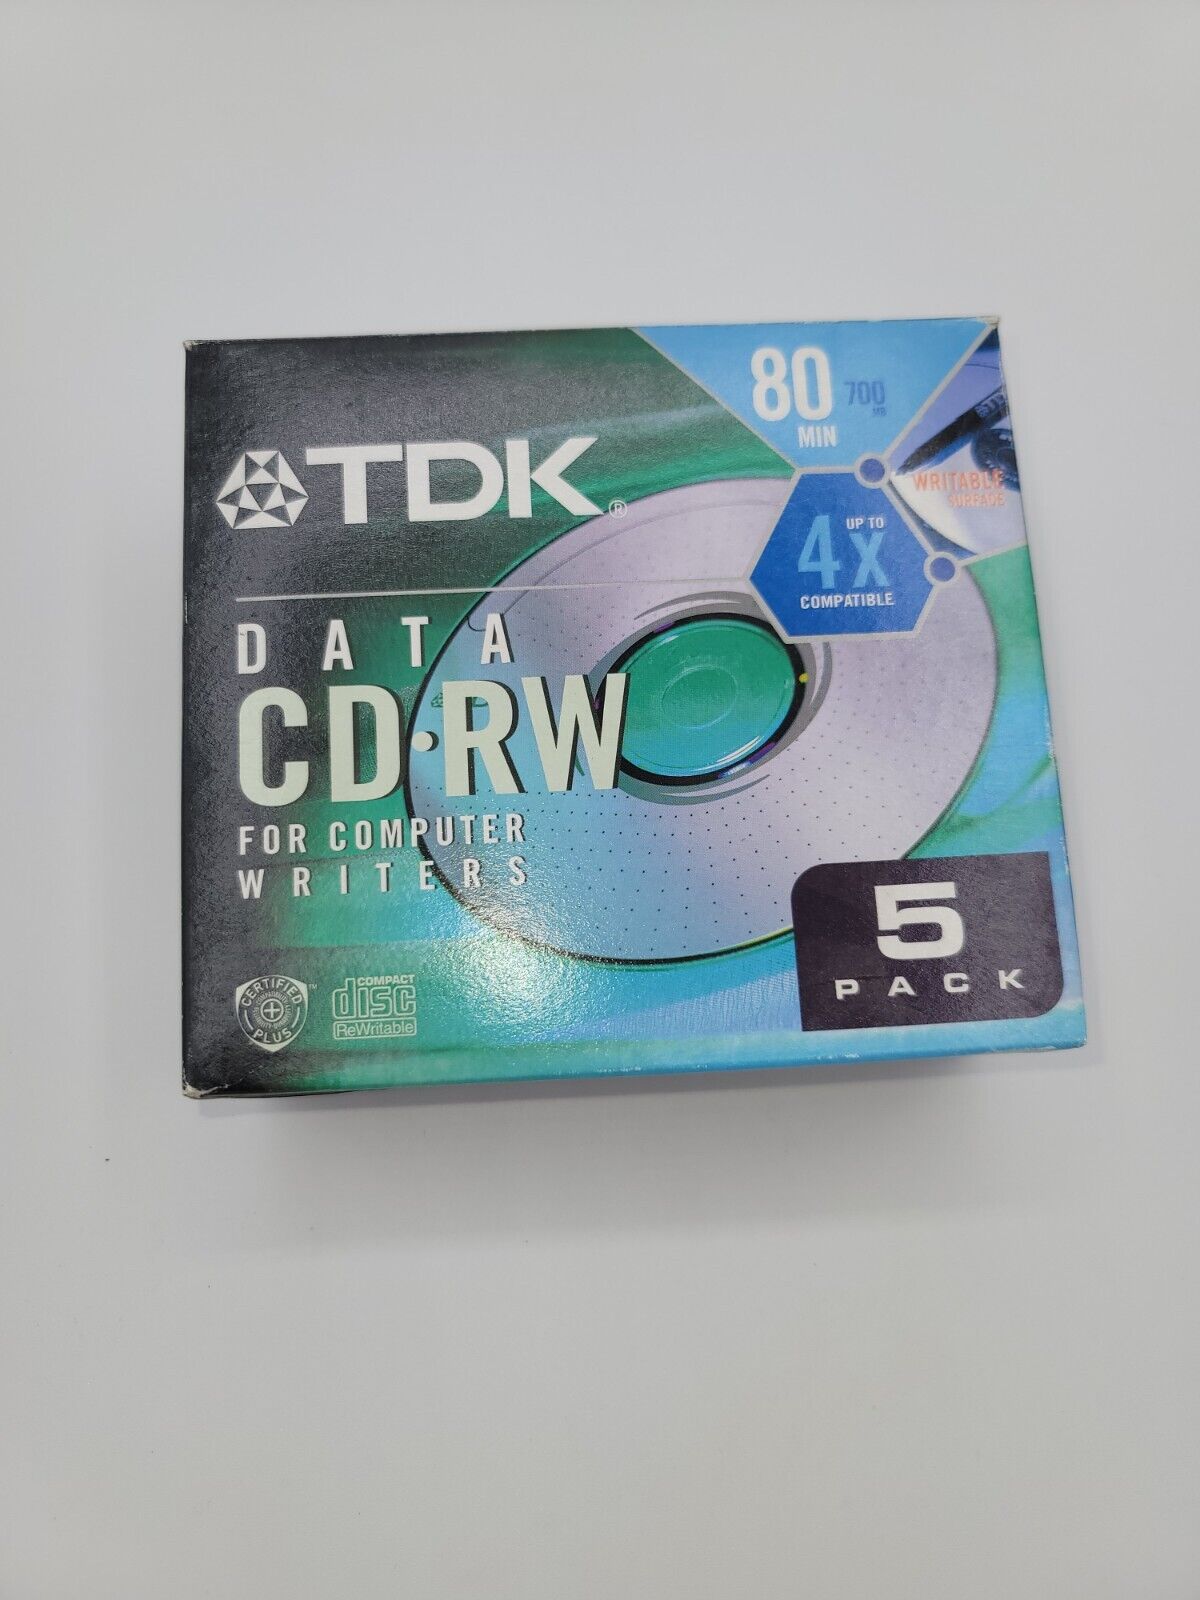 TDK CD-RW 3-Pack Rewritable Data CDs 1x-4x 700MB 80 min Blank